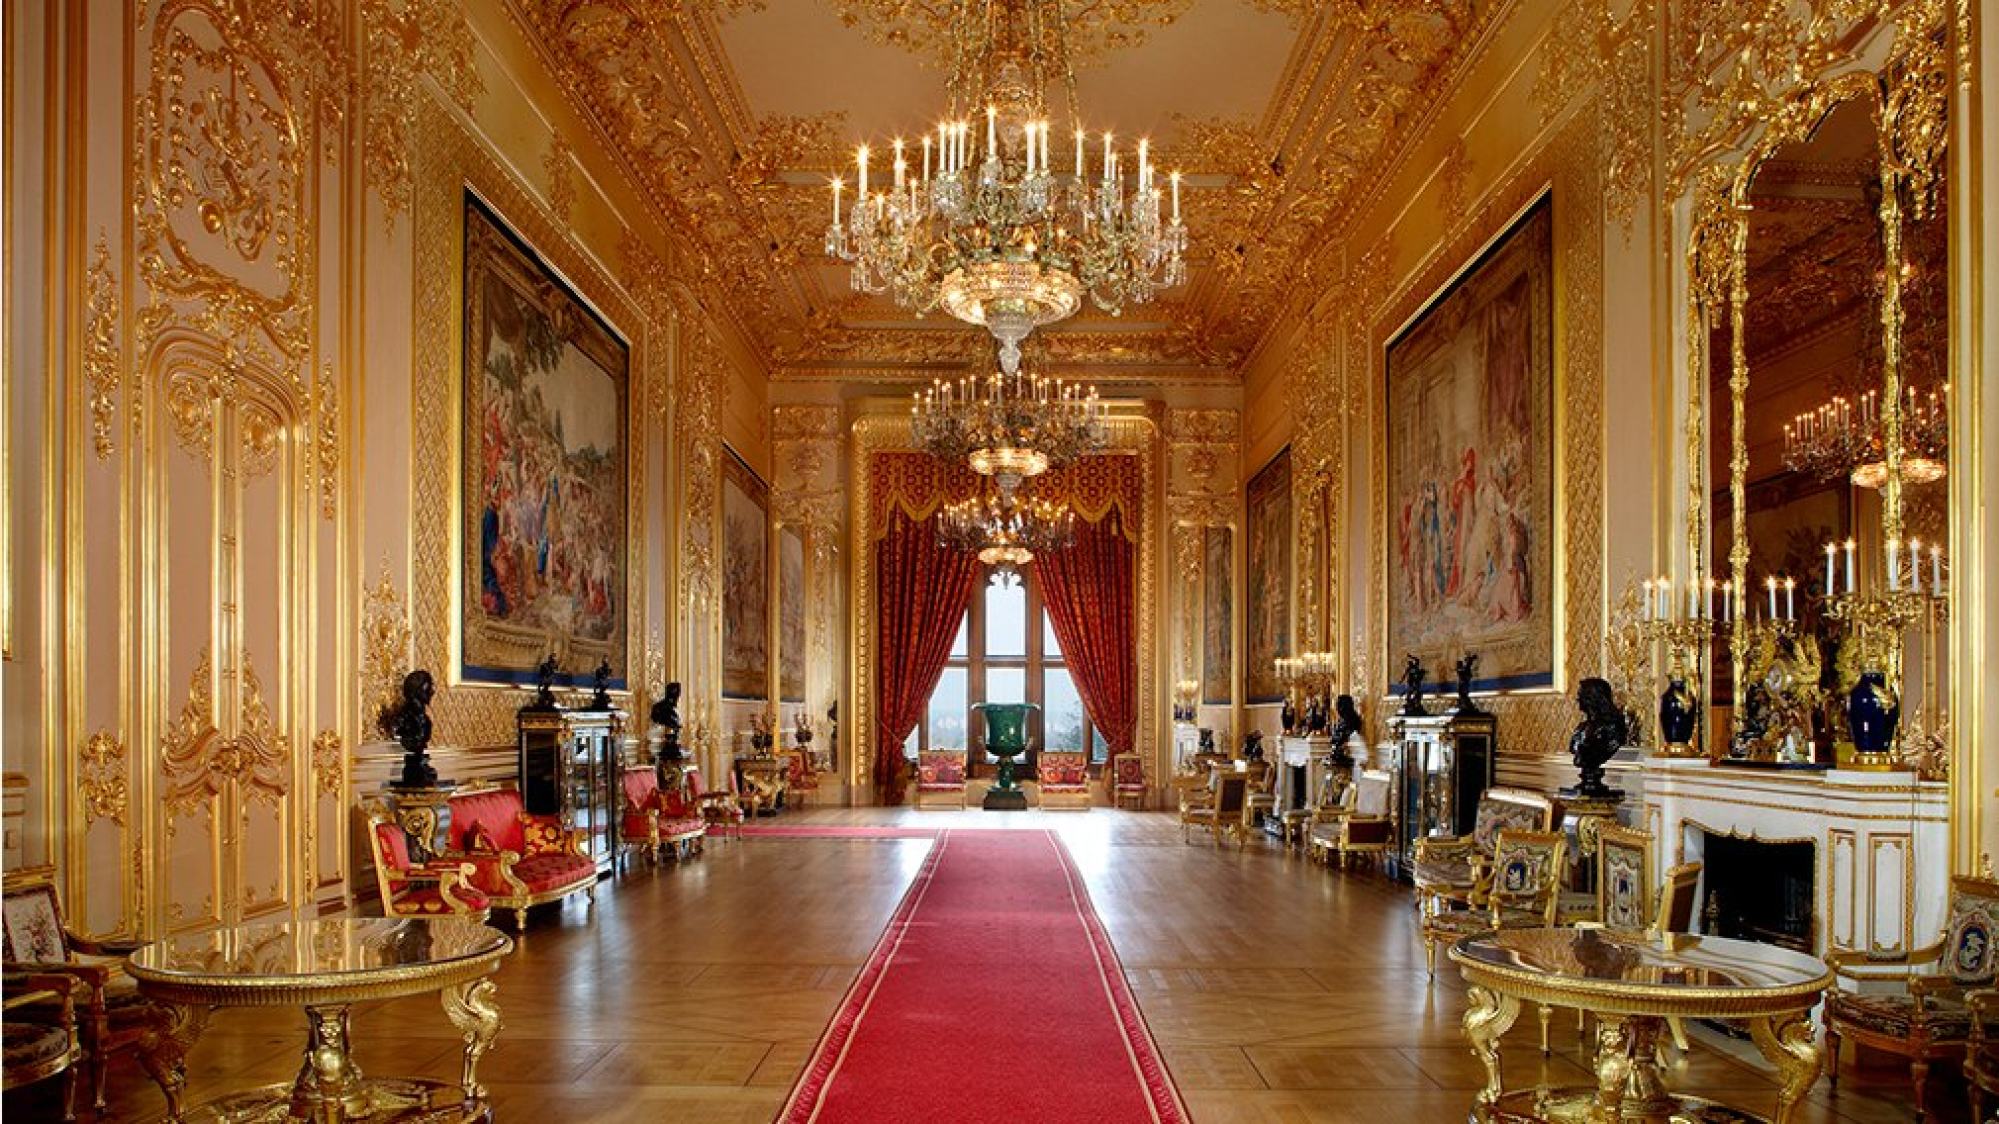 The queen s throne collection. Букингемский дворец бальный зал. Букингемский дворец галерея королевы. Букингемский дворец спальня королевы. Замок Елизаветы 2 Букингемский дворец.